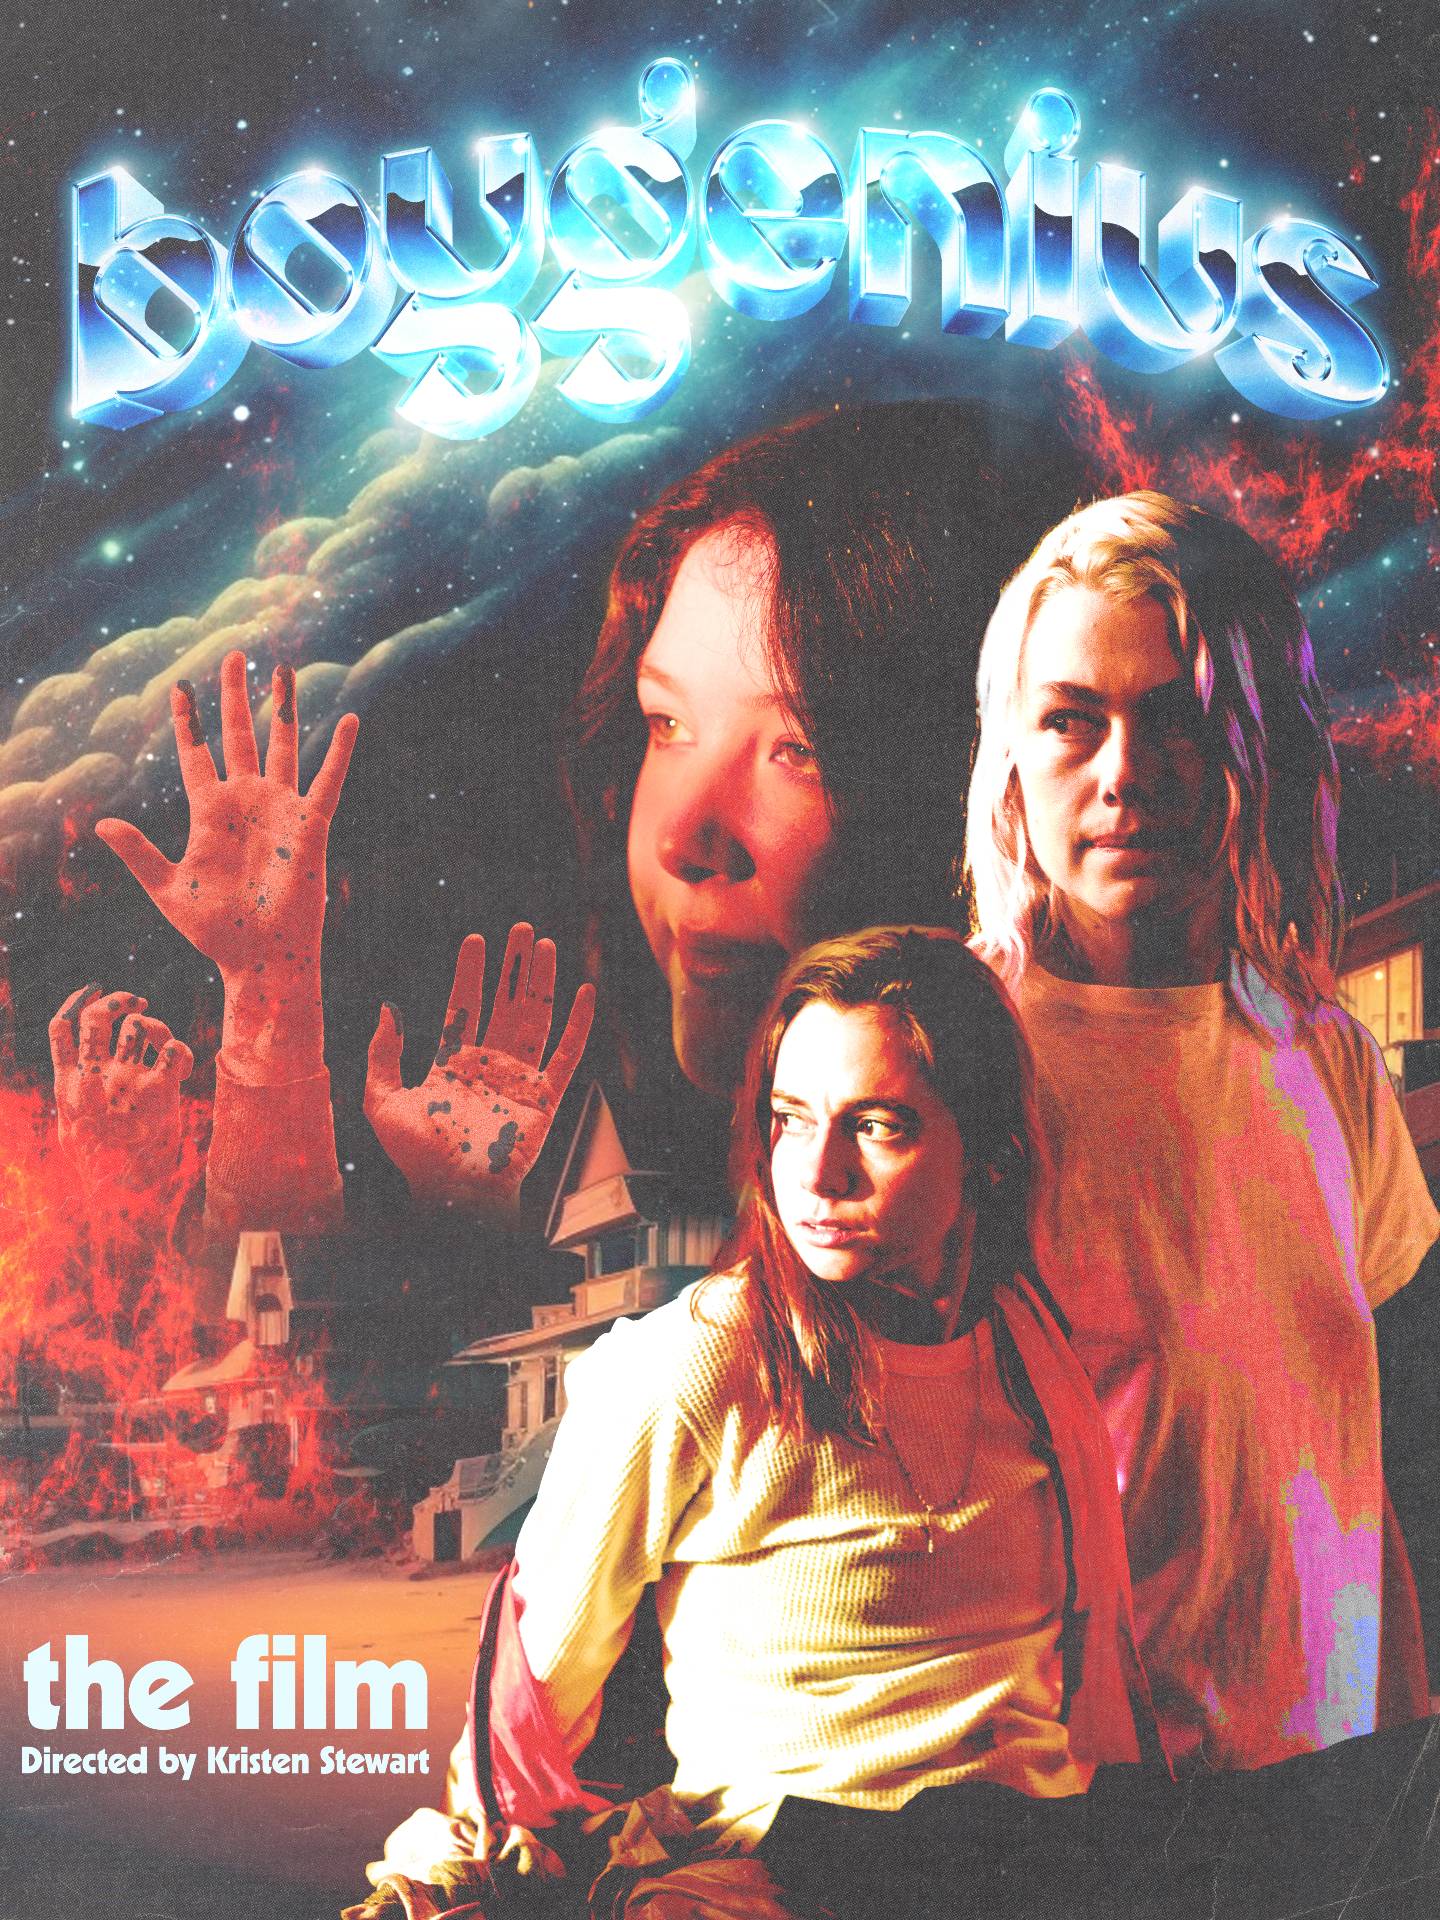 boygenius “the film” movie poster